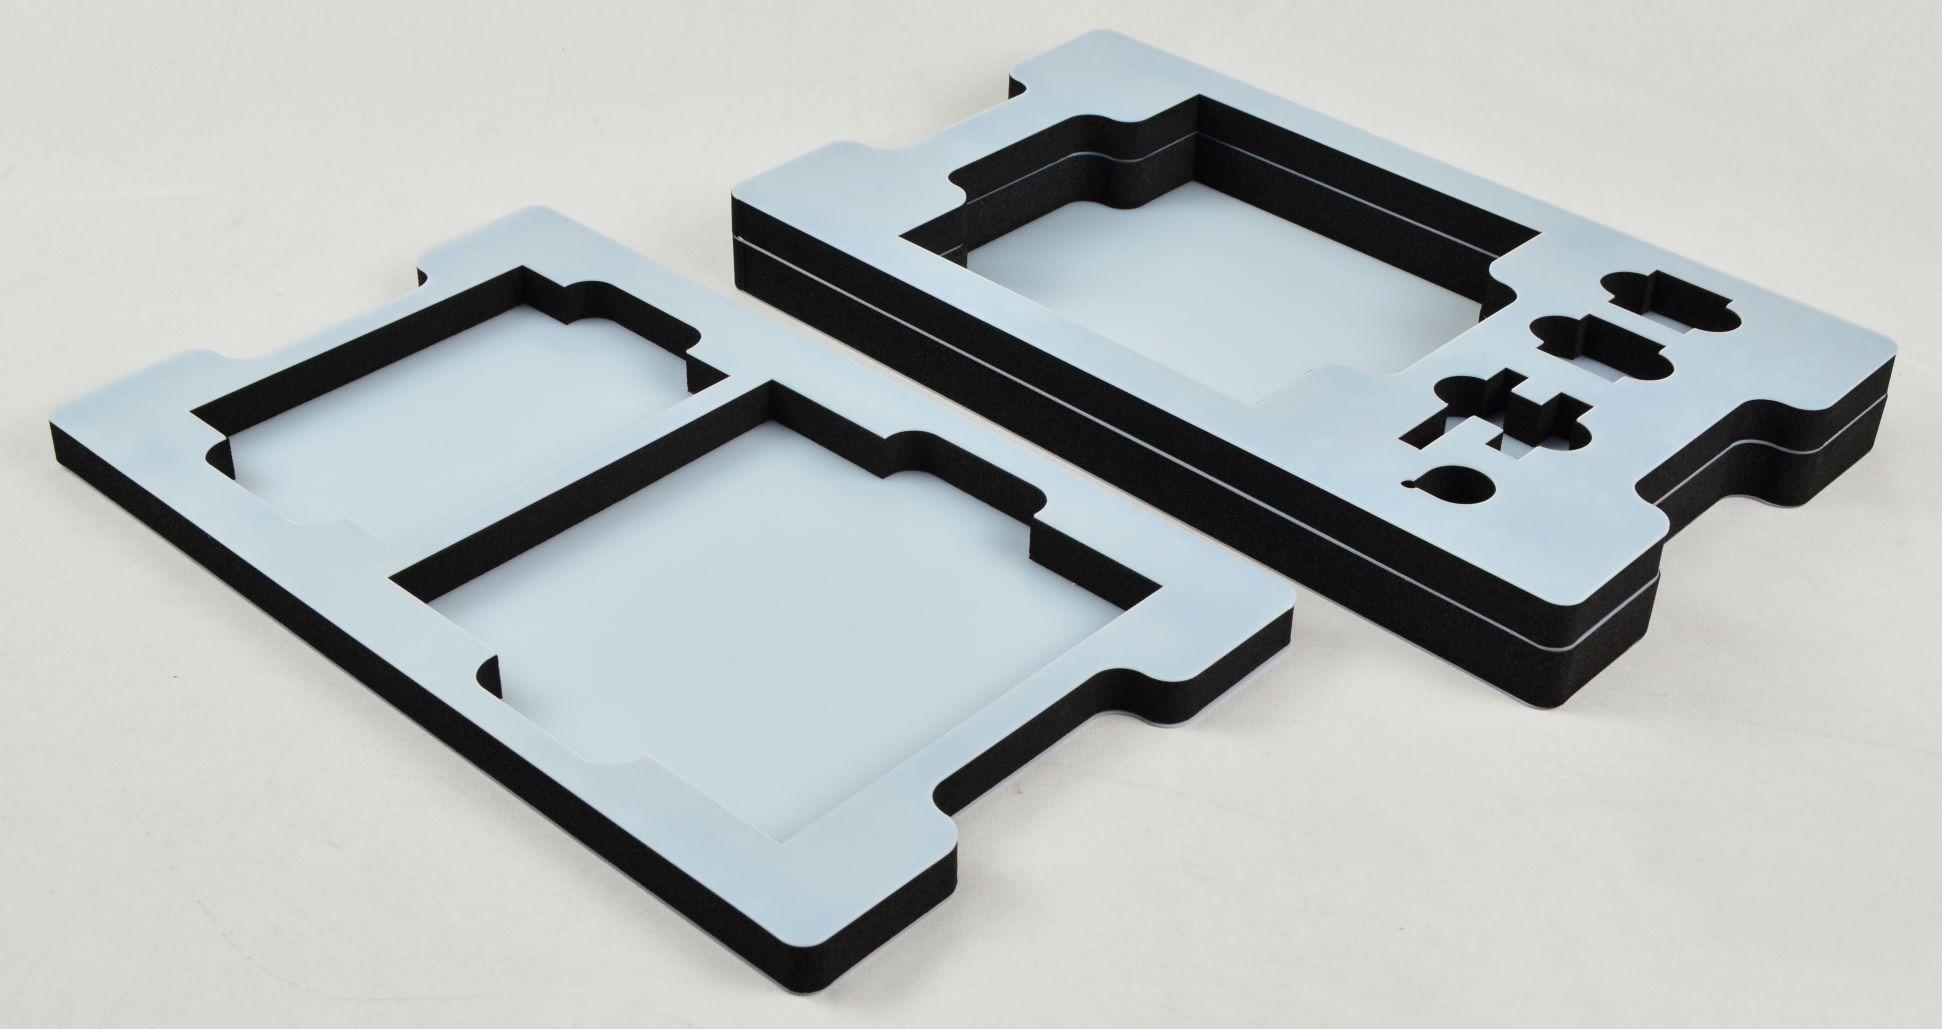 Static dissipative crosslink foam shadow trays with FOD free, static free S680 overlay